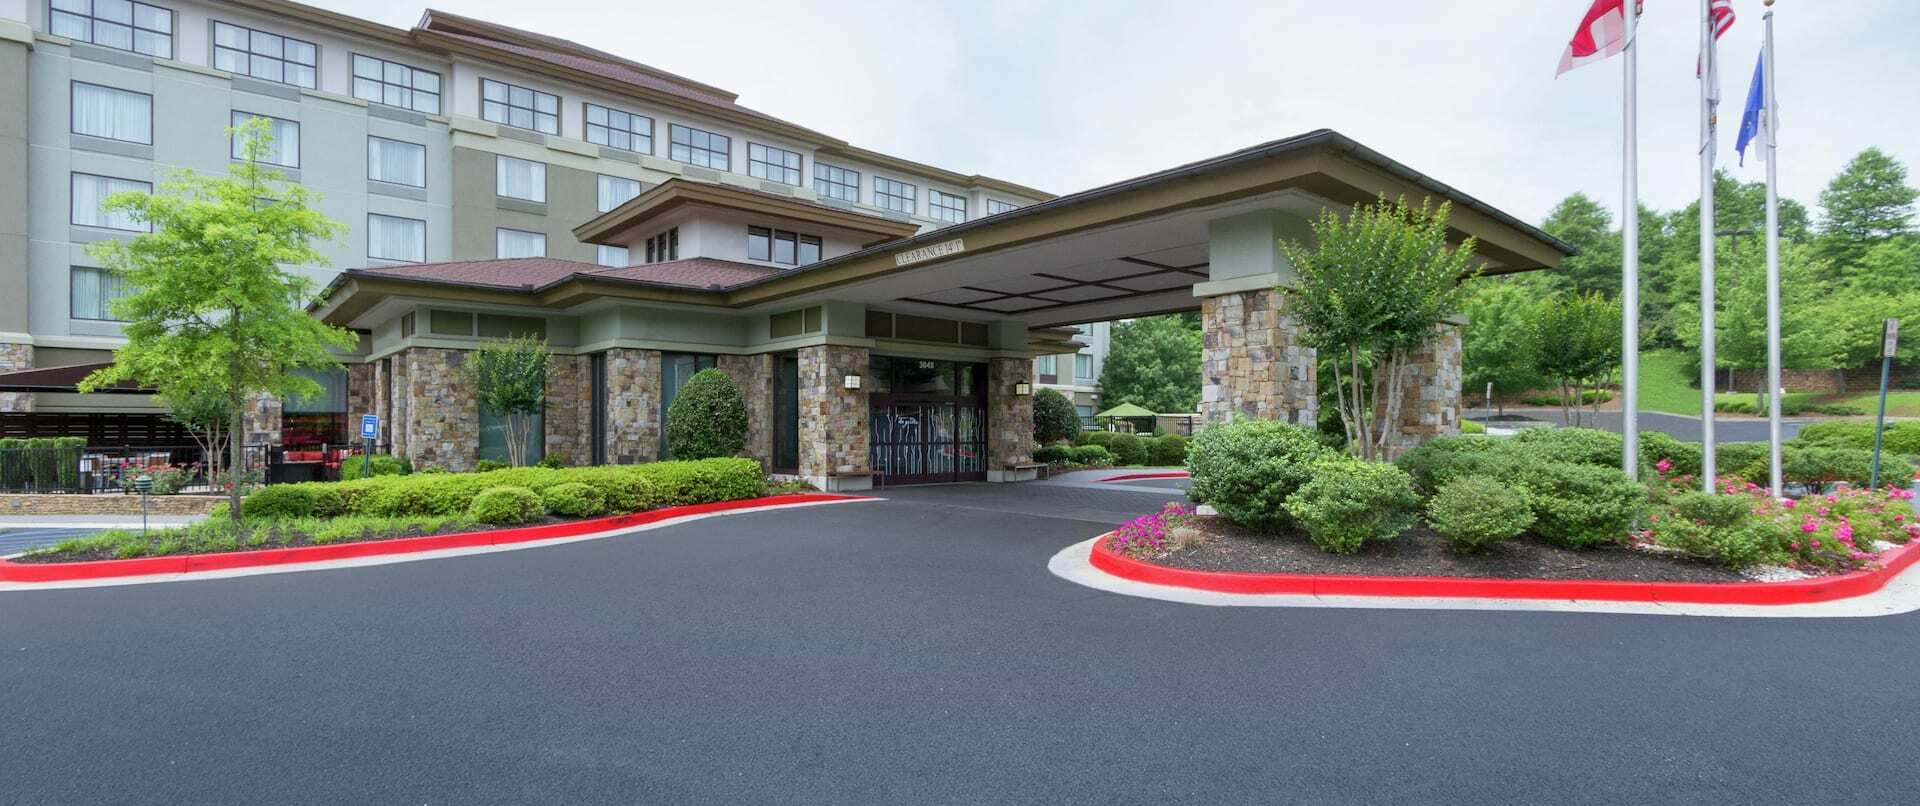 Photo of Hilton Garden Inn Atlanta Marietta, Atlanta, GA